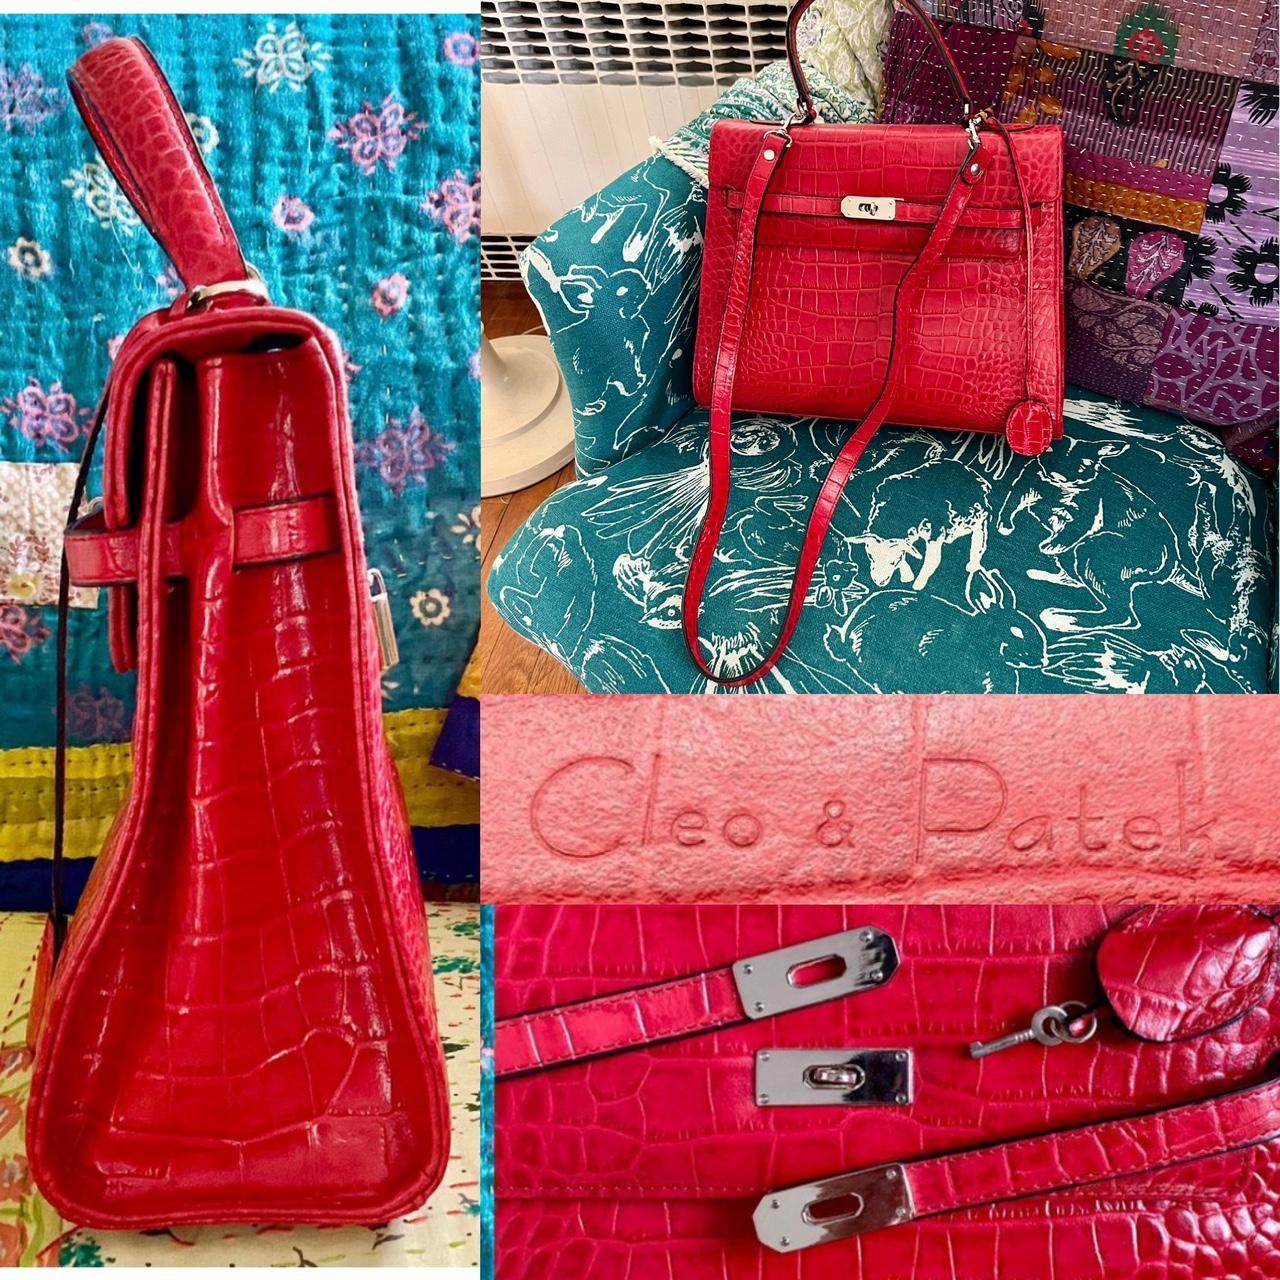 Prada Cleo brushed leather mini bag in scarlet red - Depop